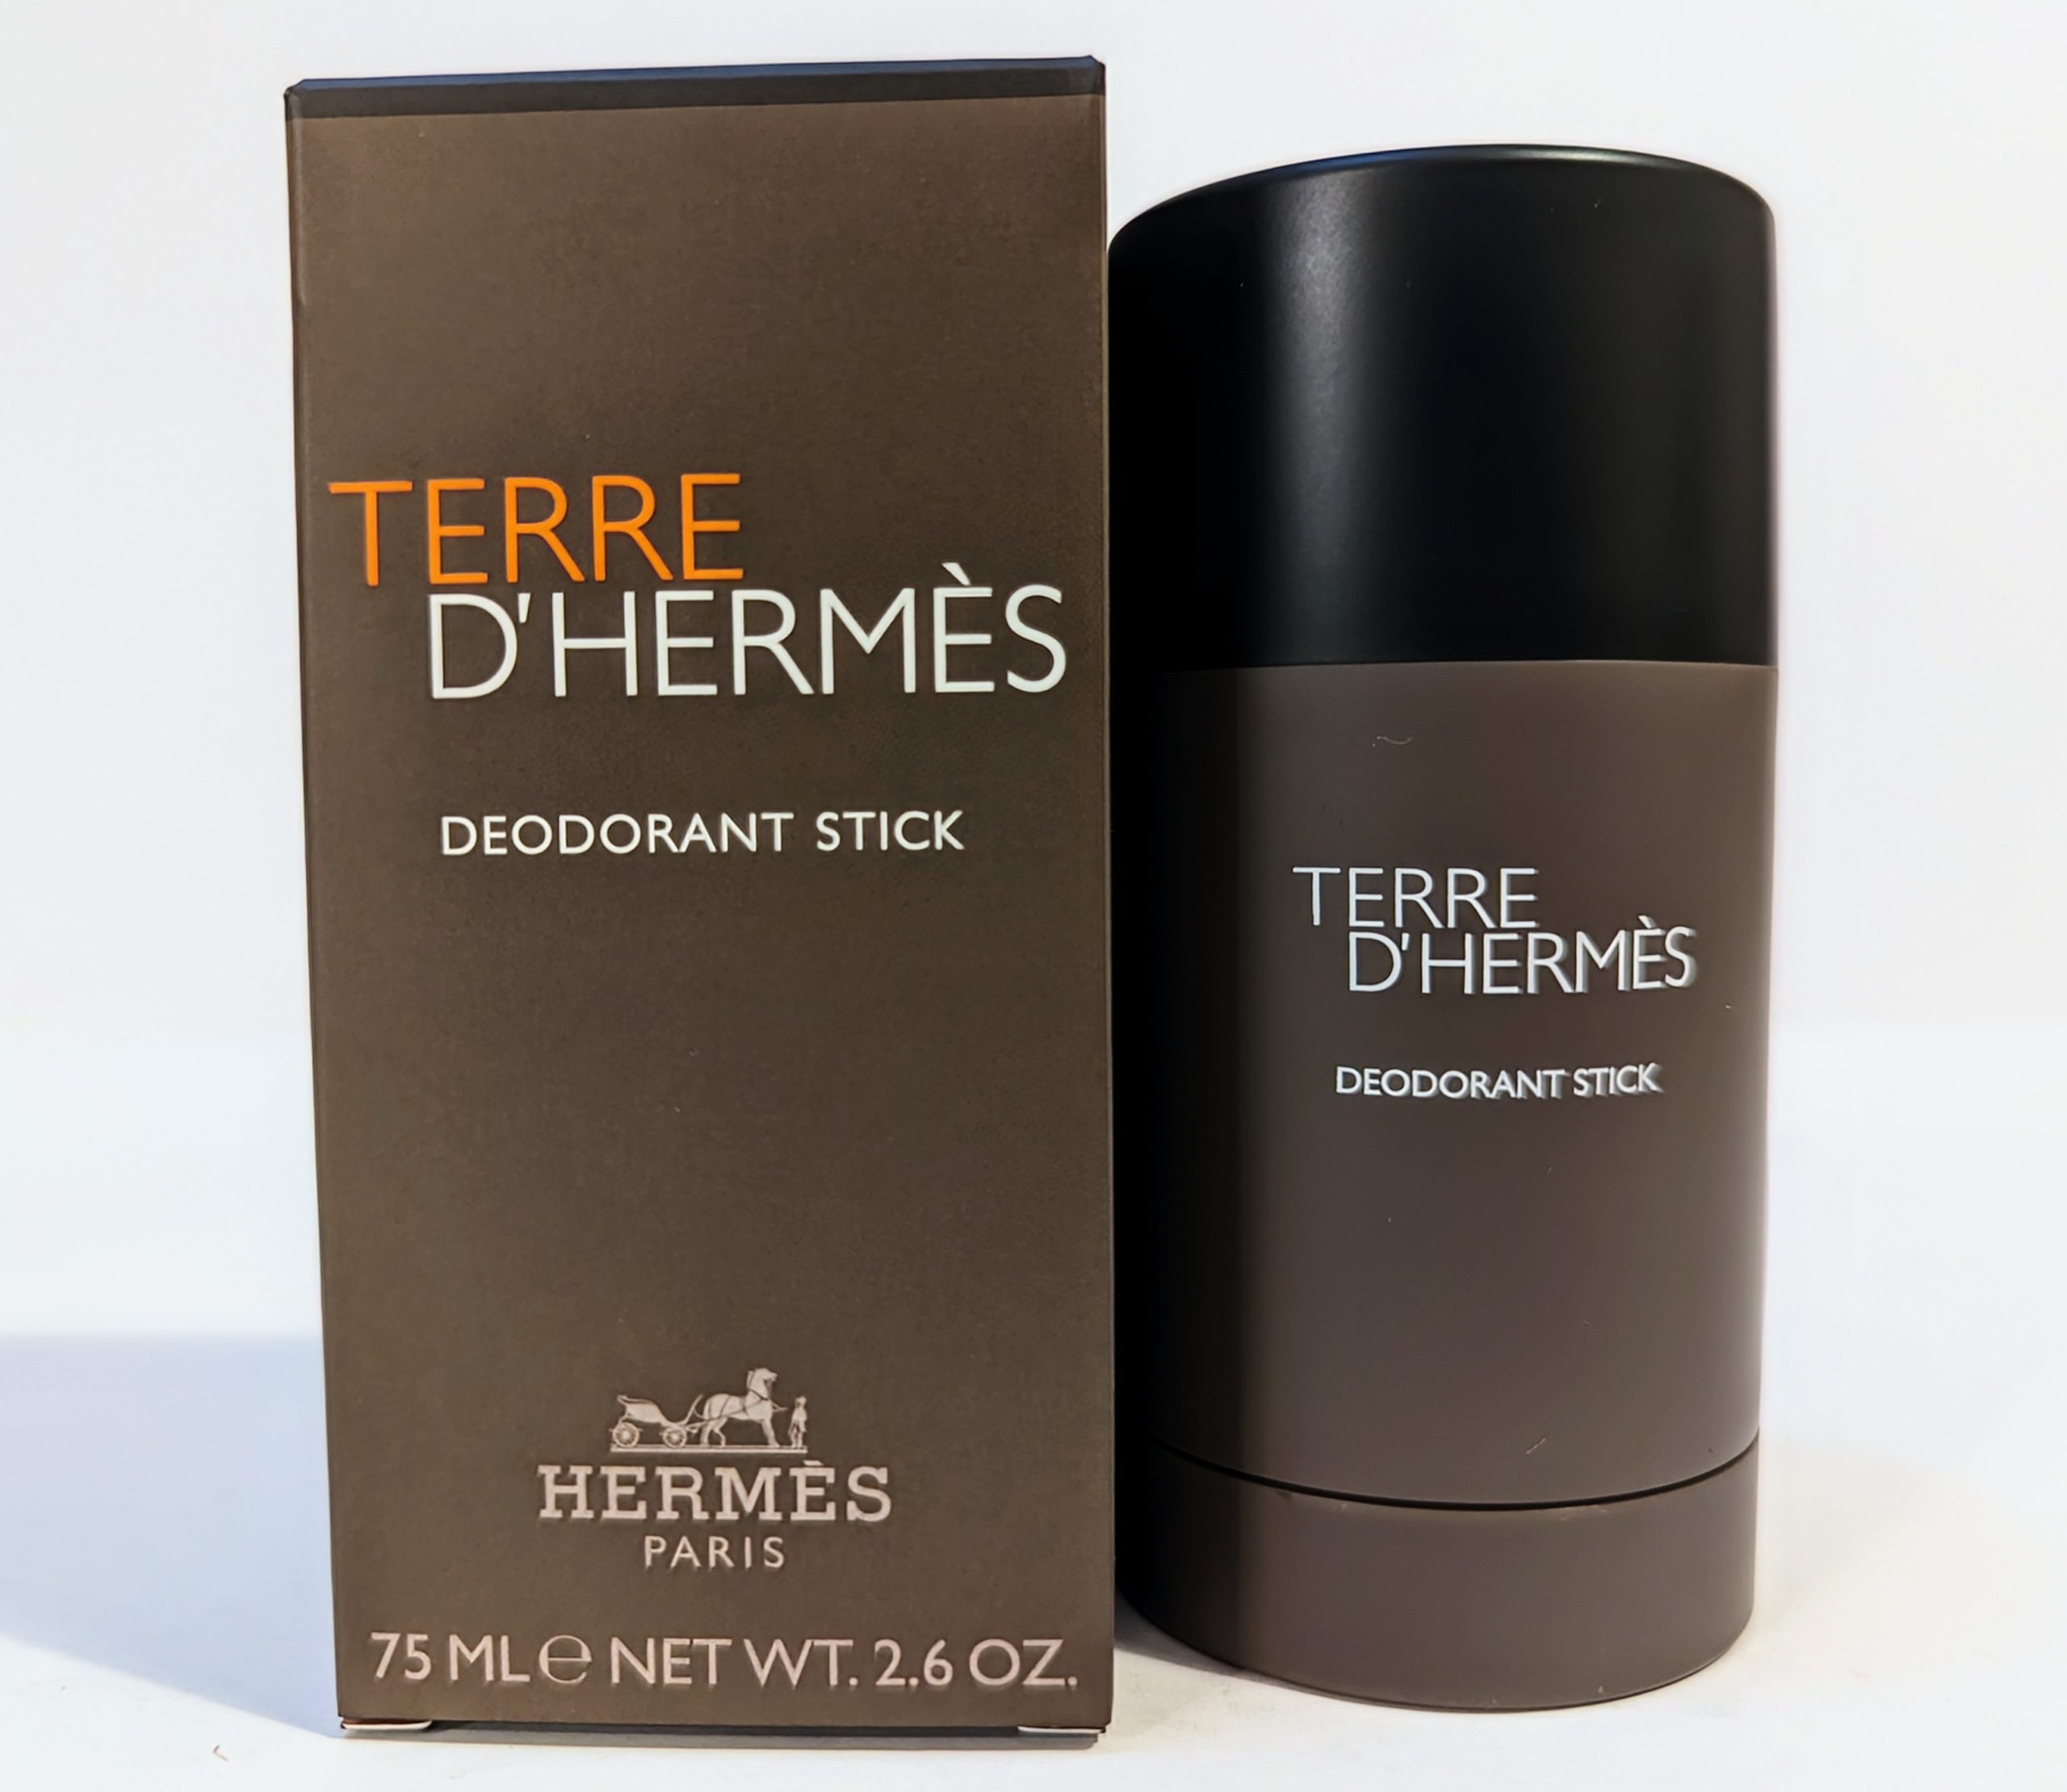 Image of Terre d’Hermès deodorant stick, 75ml, displayed next to its brown and orange packaging.